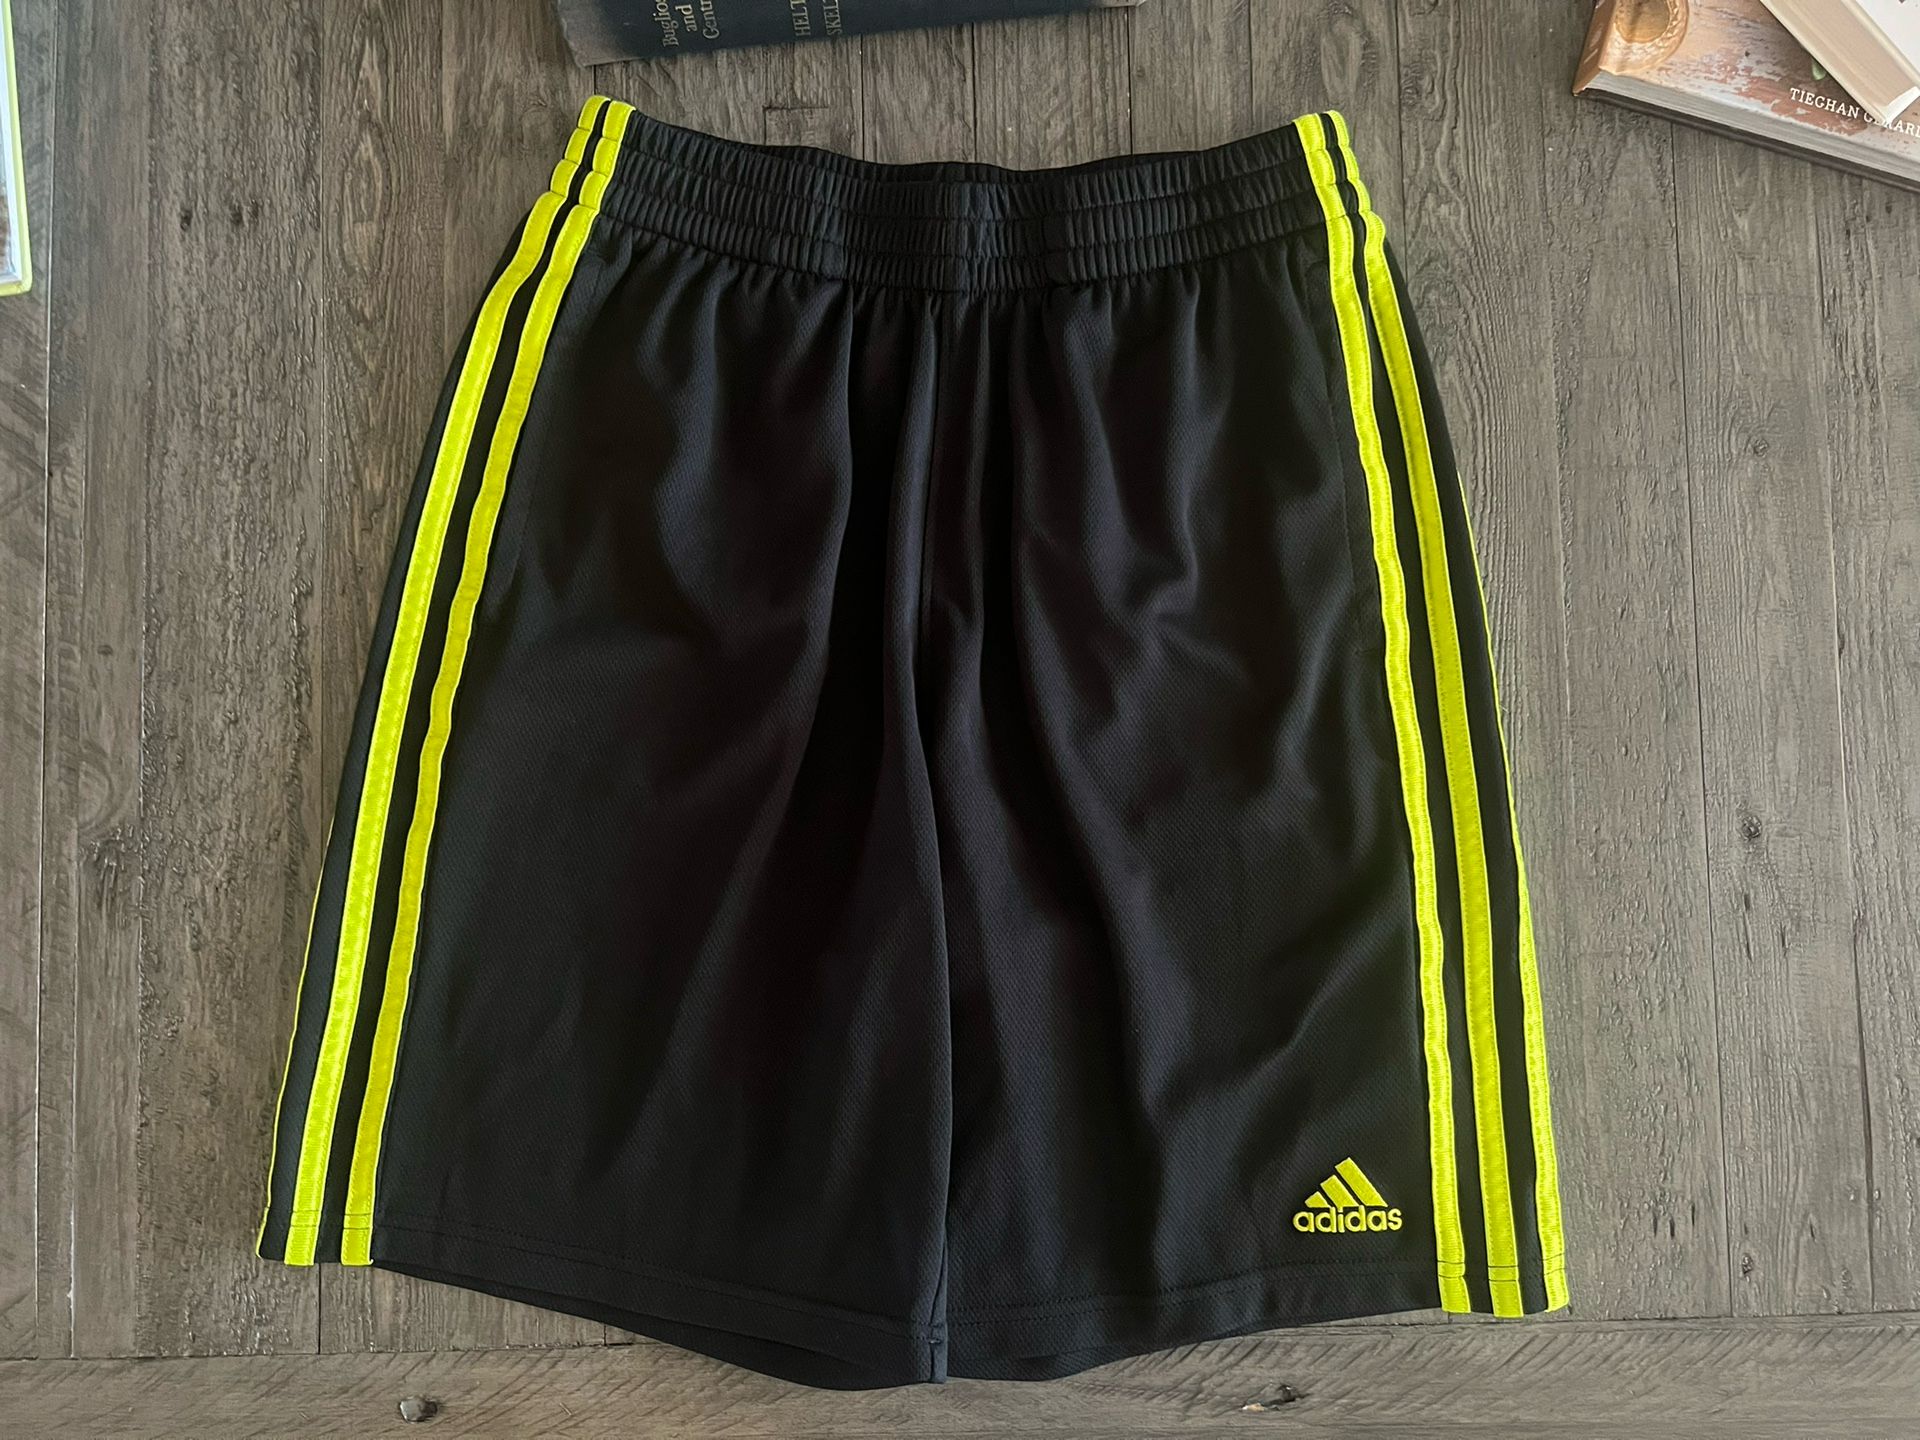 Adidas Boys Shorts Size XL (18/20)